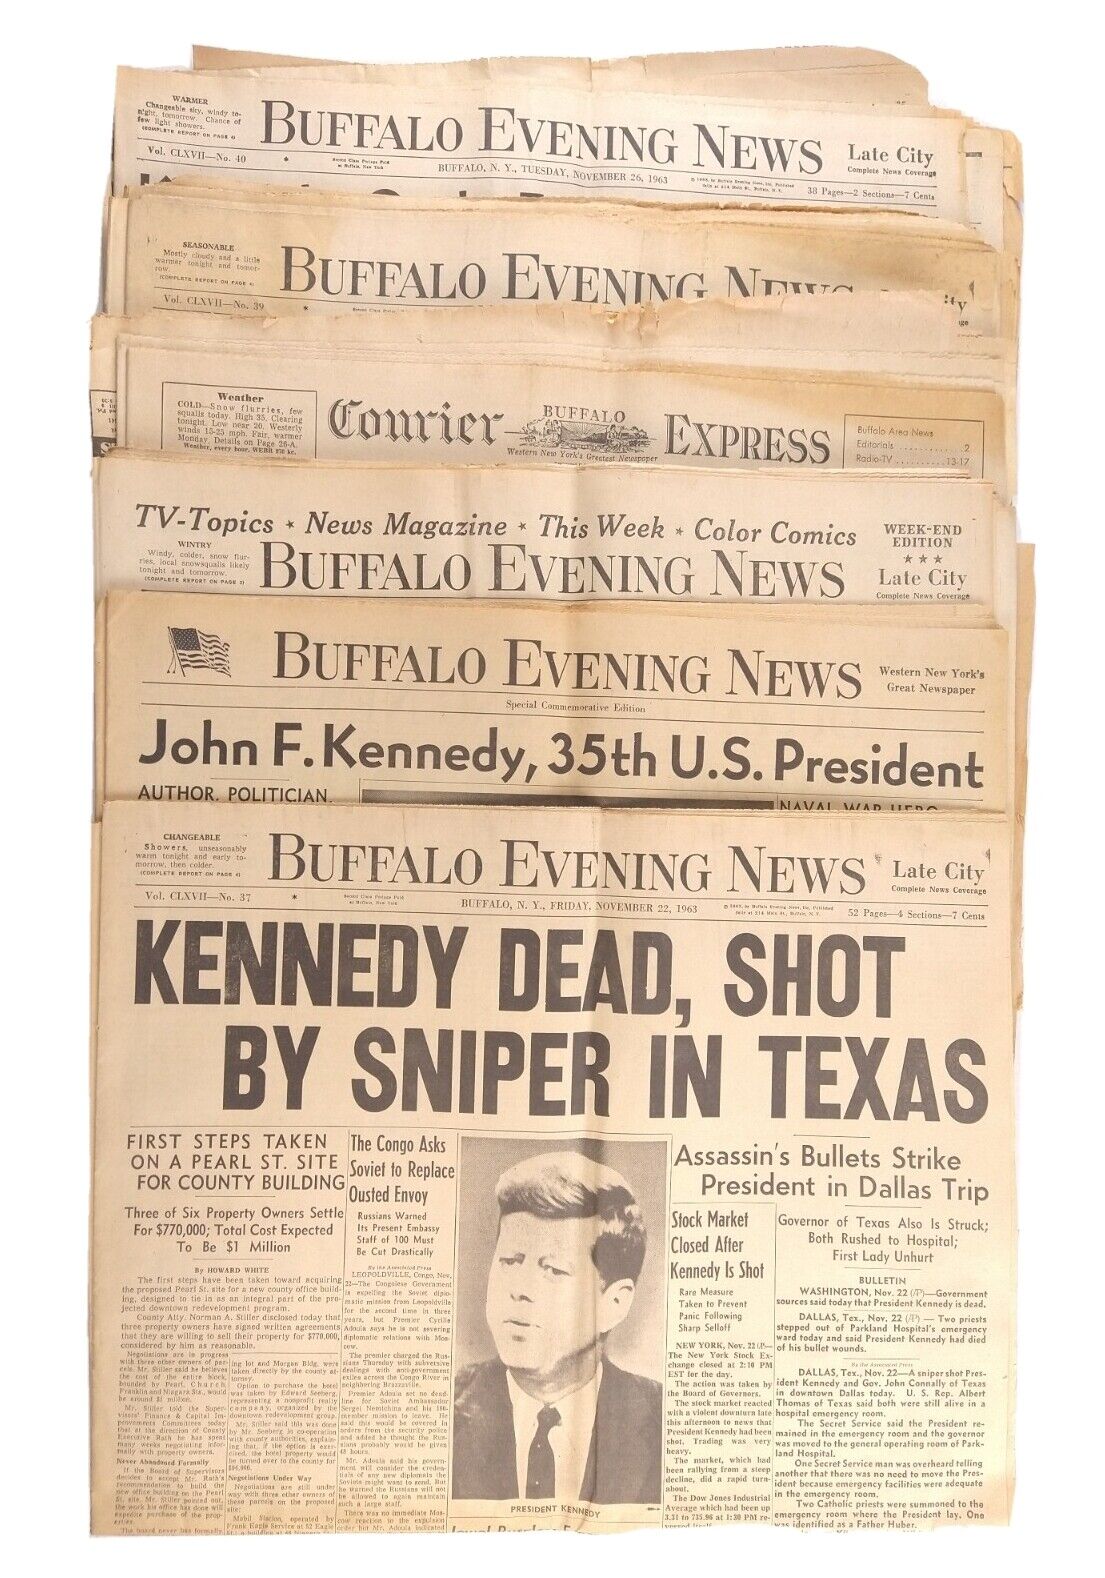 Buffalo Evening News November 22 23 24-26 1963 President Kennedy Newspapers Lot